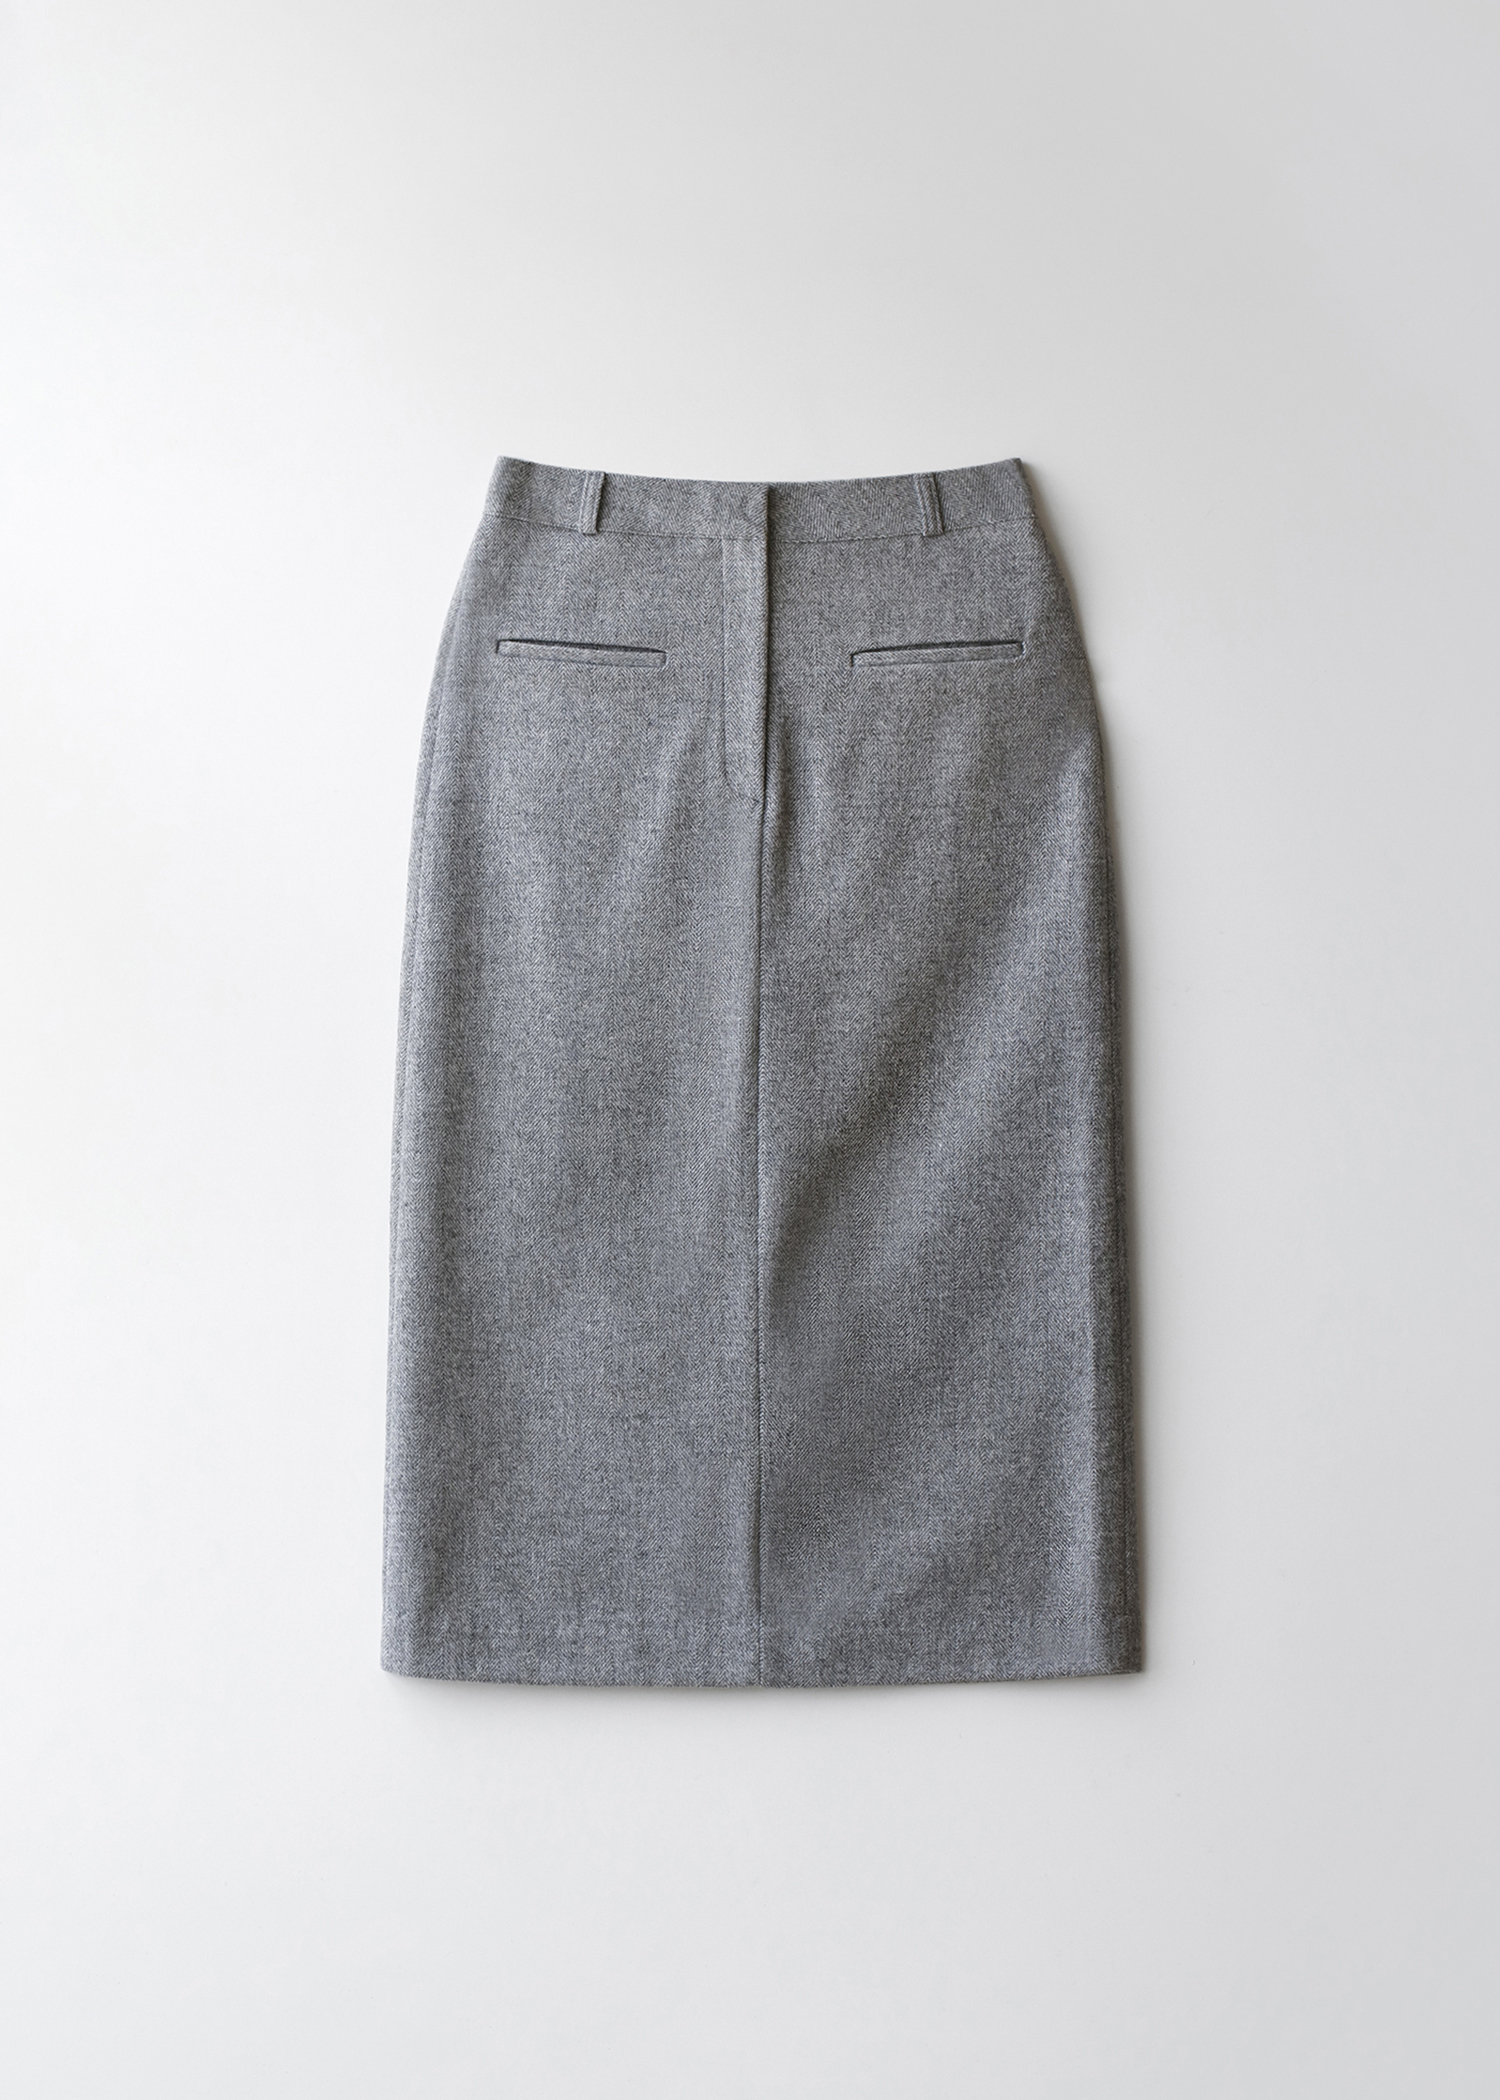 Wool pencil skirt (gray)